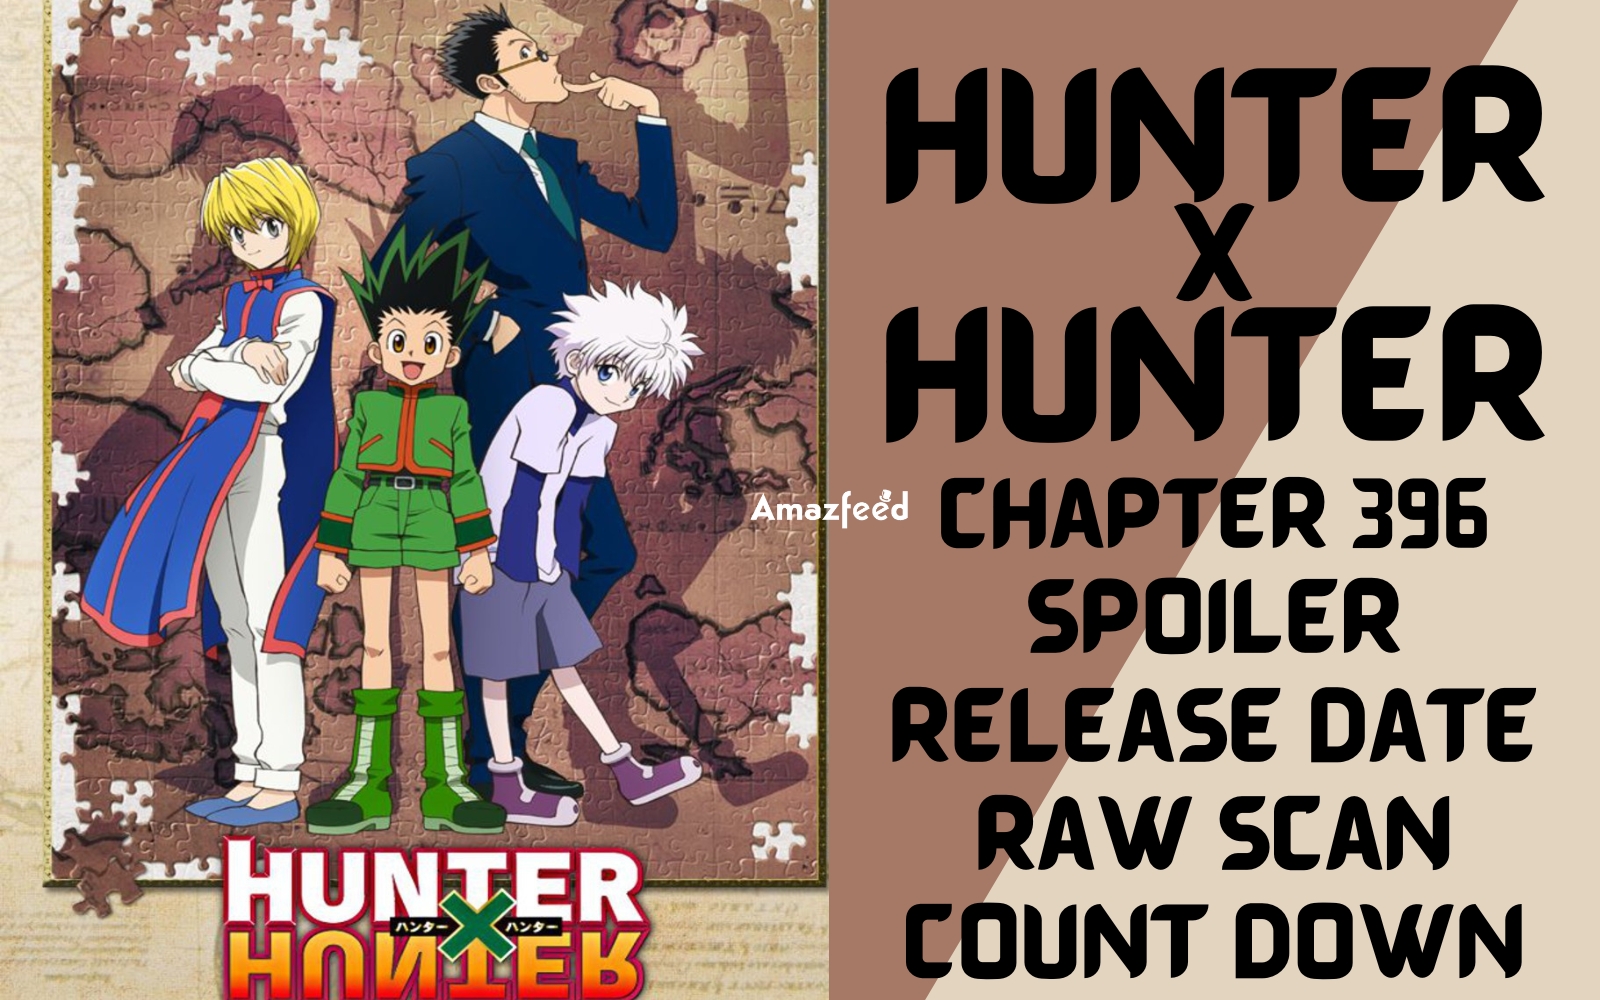 Hunter X Hunter chapter 396 Spoiler, Raw Scan, Release Date, Countdown